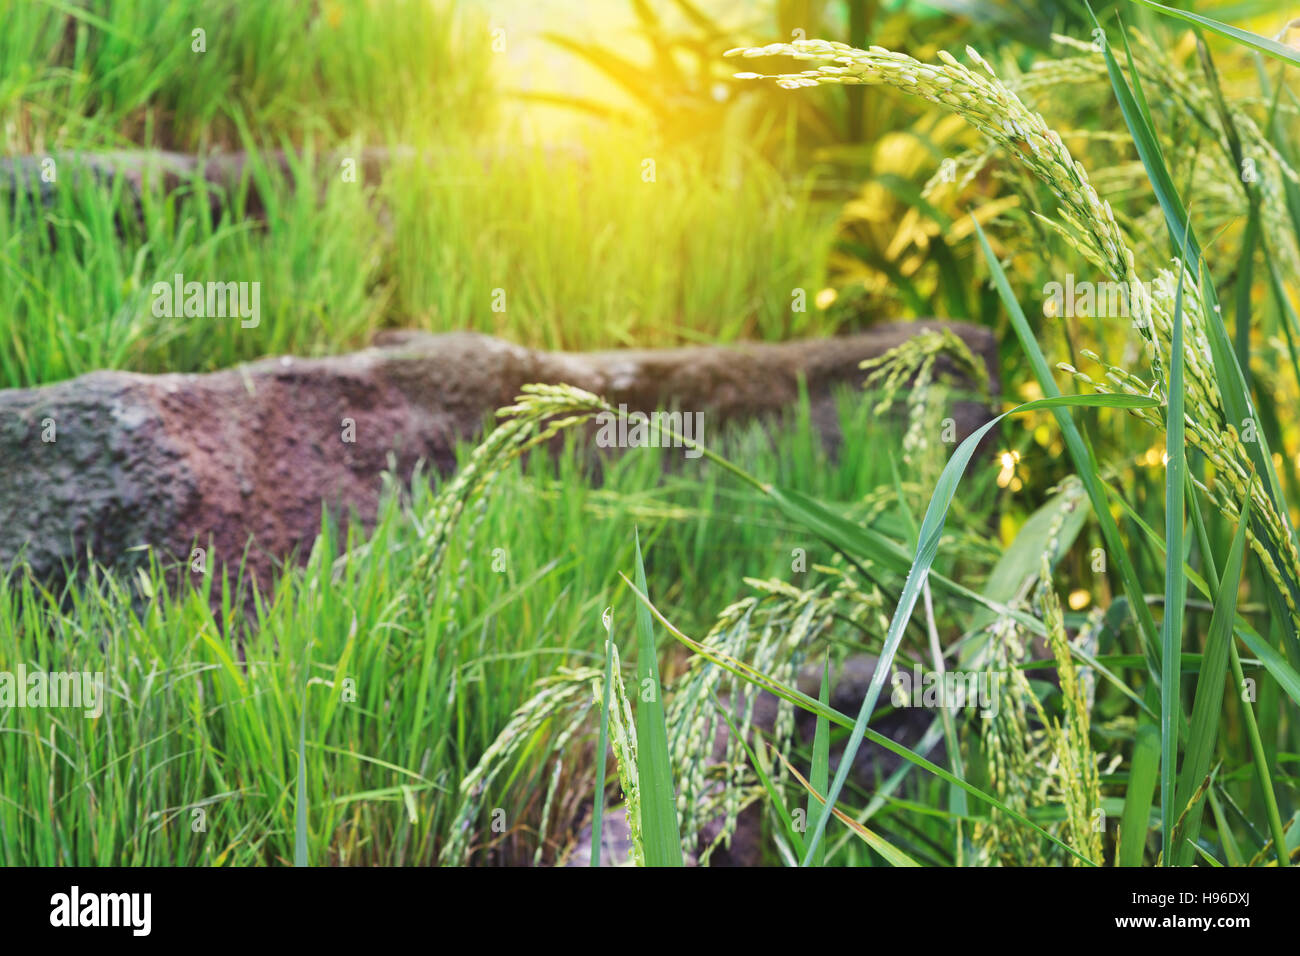 green terraced rice paddy field, rice plantation Stock Photo